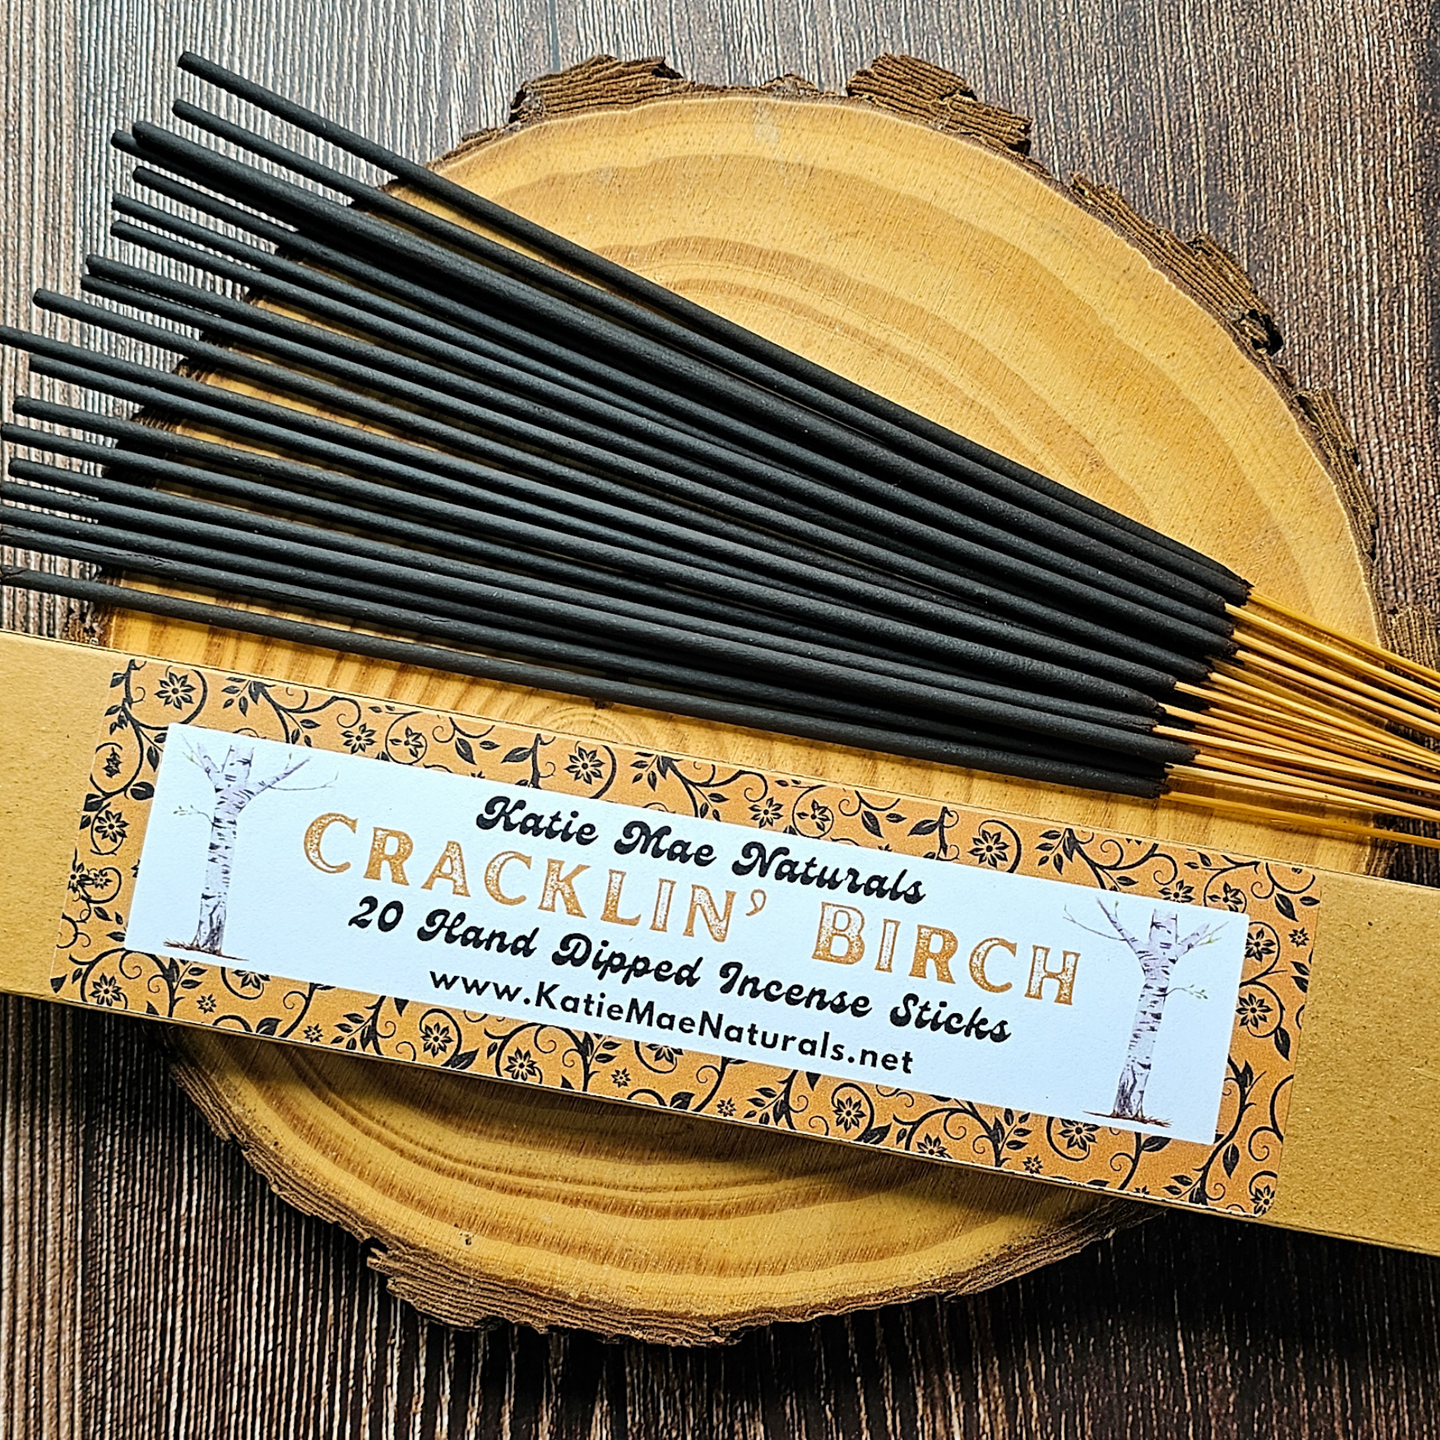 Birch scented incense sticks 